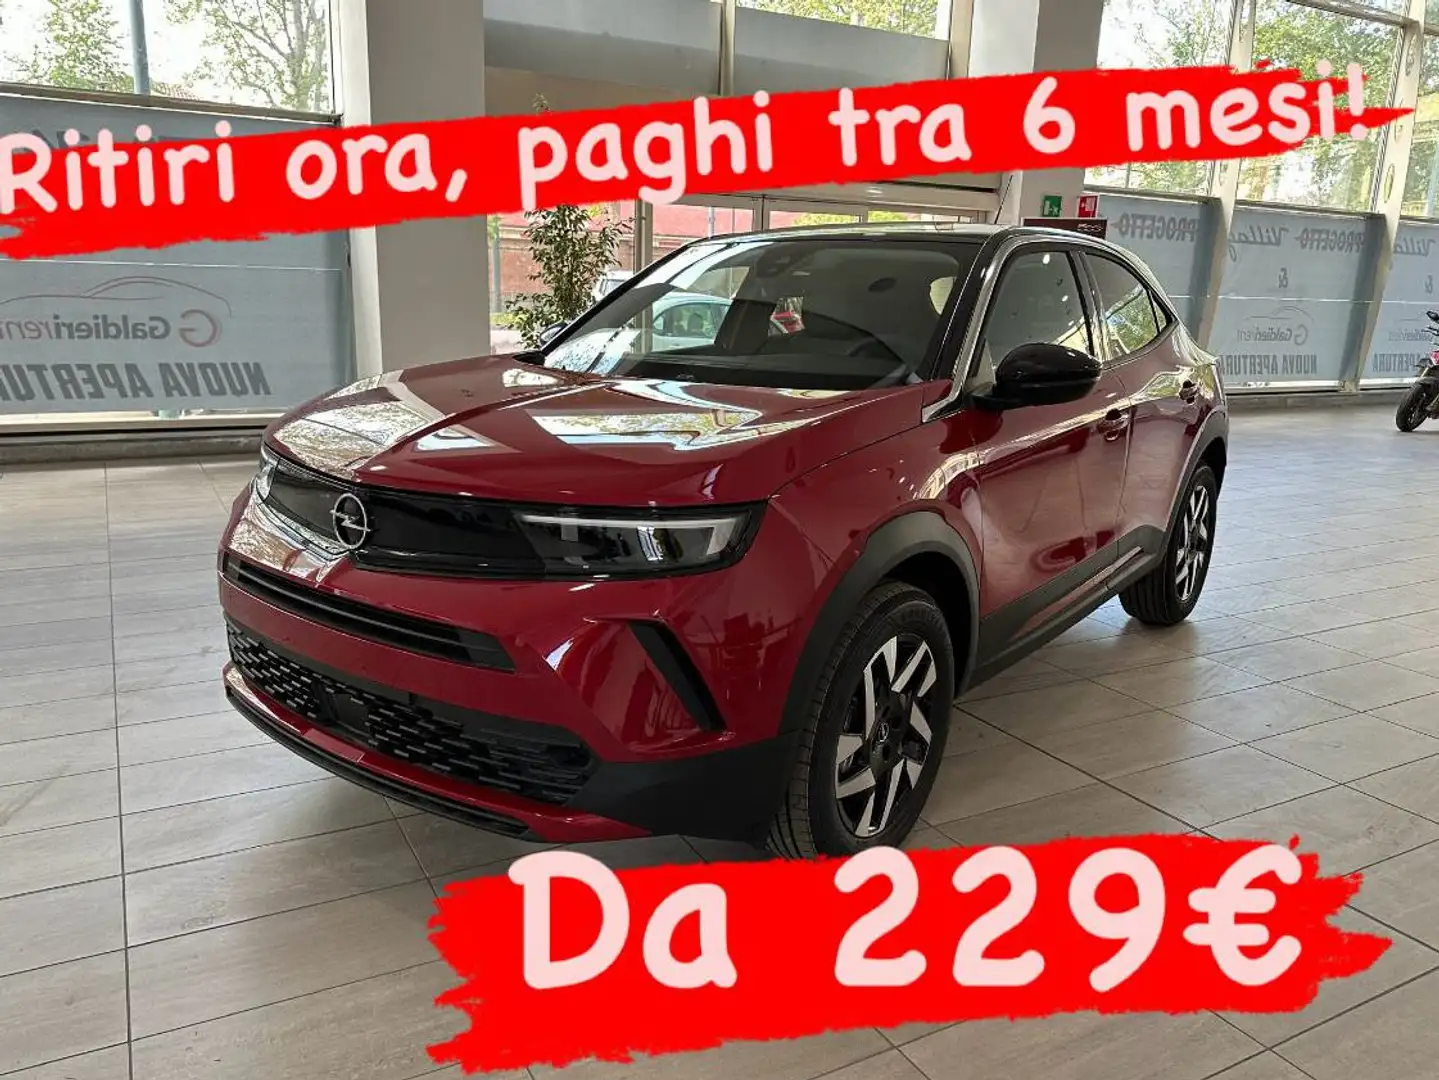 Opel Mokka DA 229€ TRA 6 MESI! Red - 1